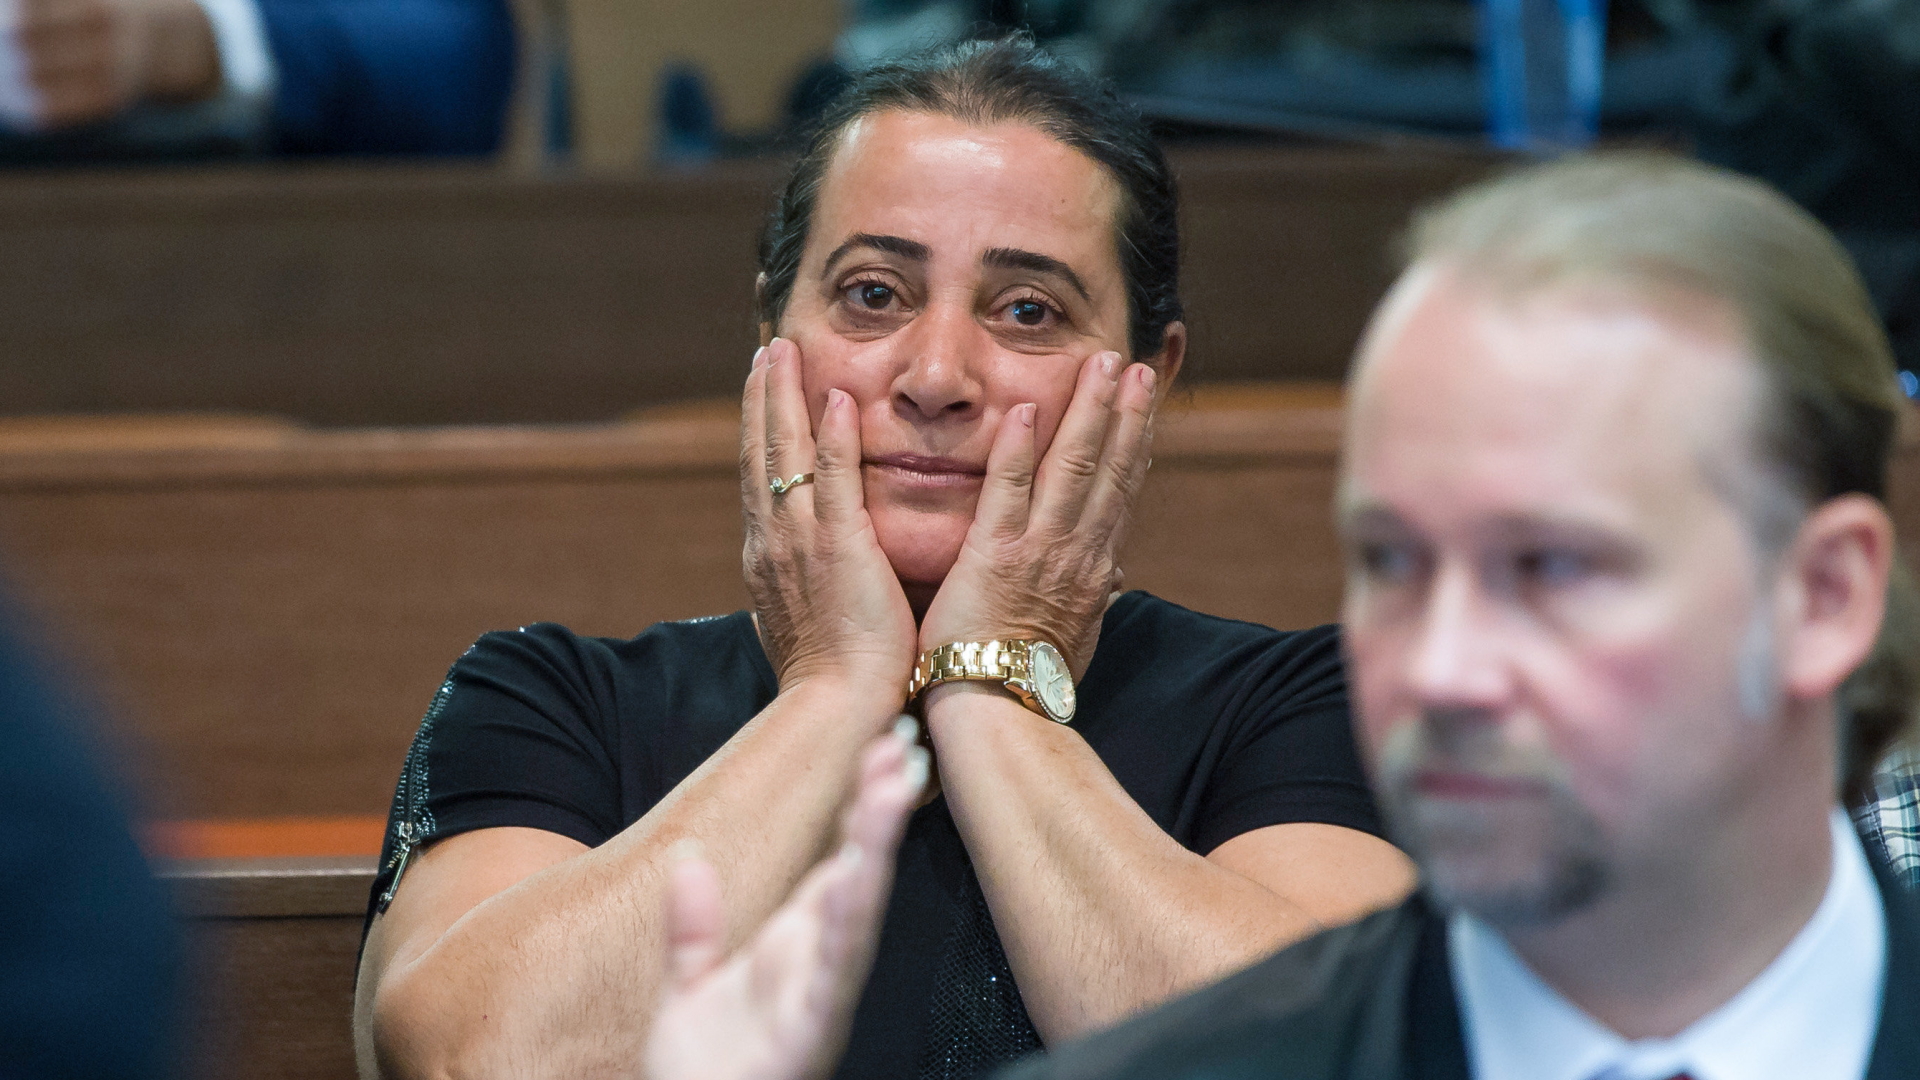 lif Kubasik, Ehefrau des NSU-Opfers Mehmet Kubasik, sitzt im Oberlandesgericht. | dpa